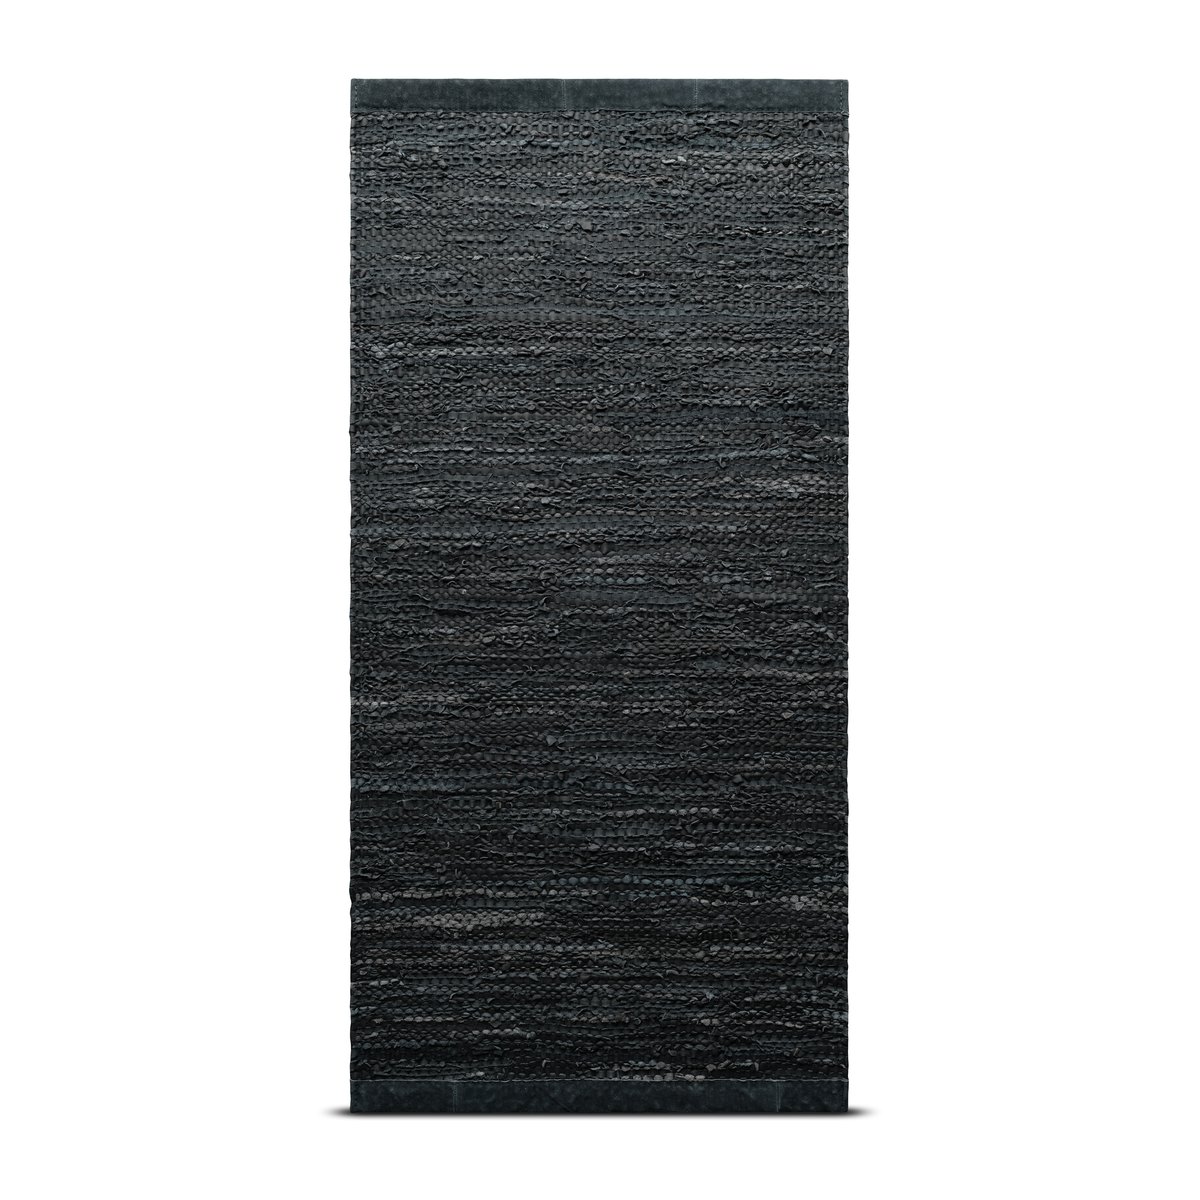 Bilde av Rug Solid Leather gulvteppe 200x300 cm dark grey (mørkegrå)